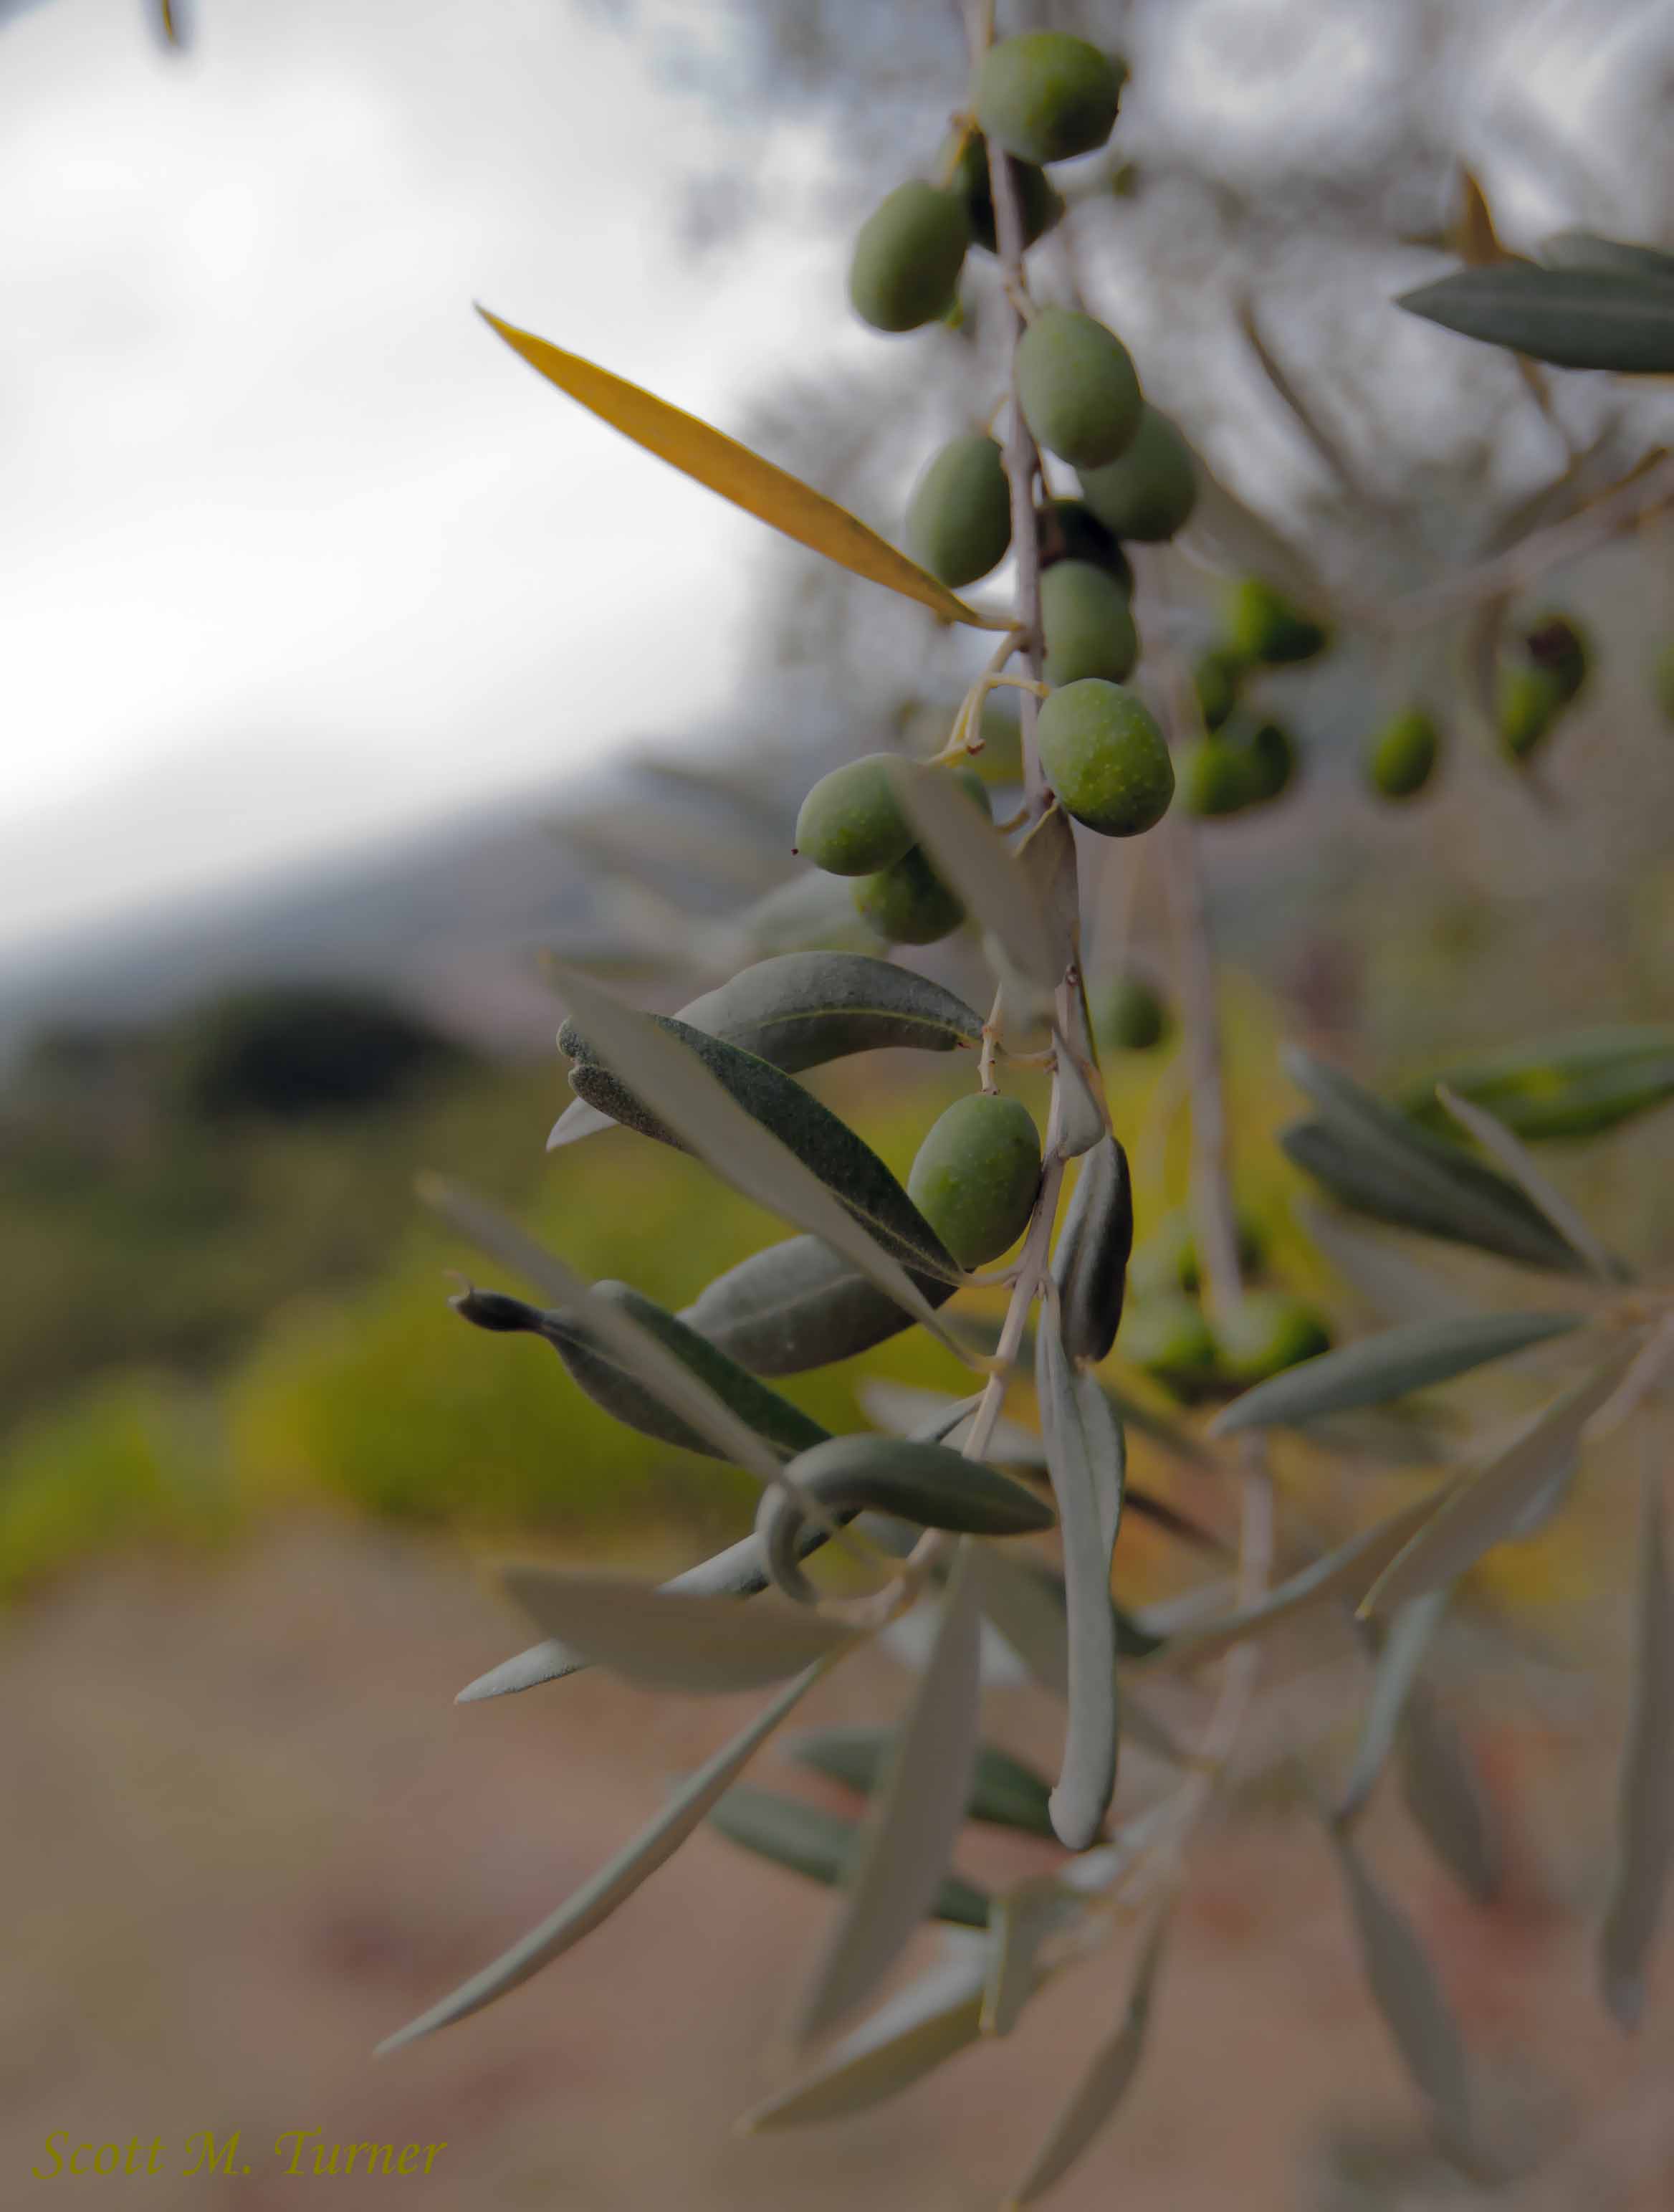 Olives not yet ripe